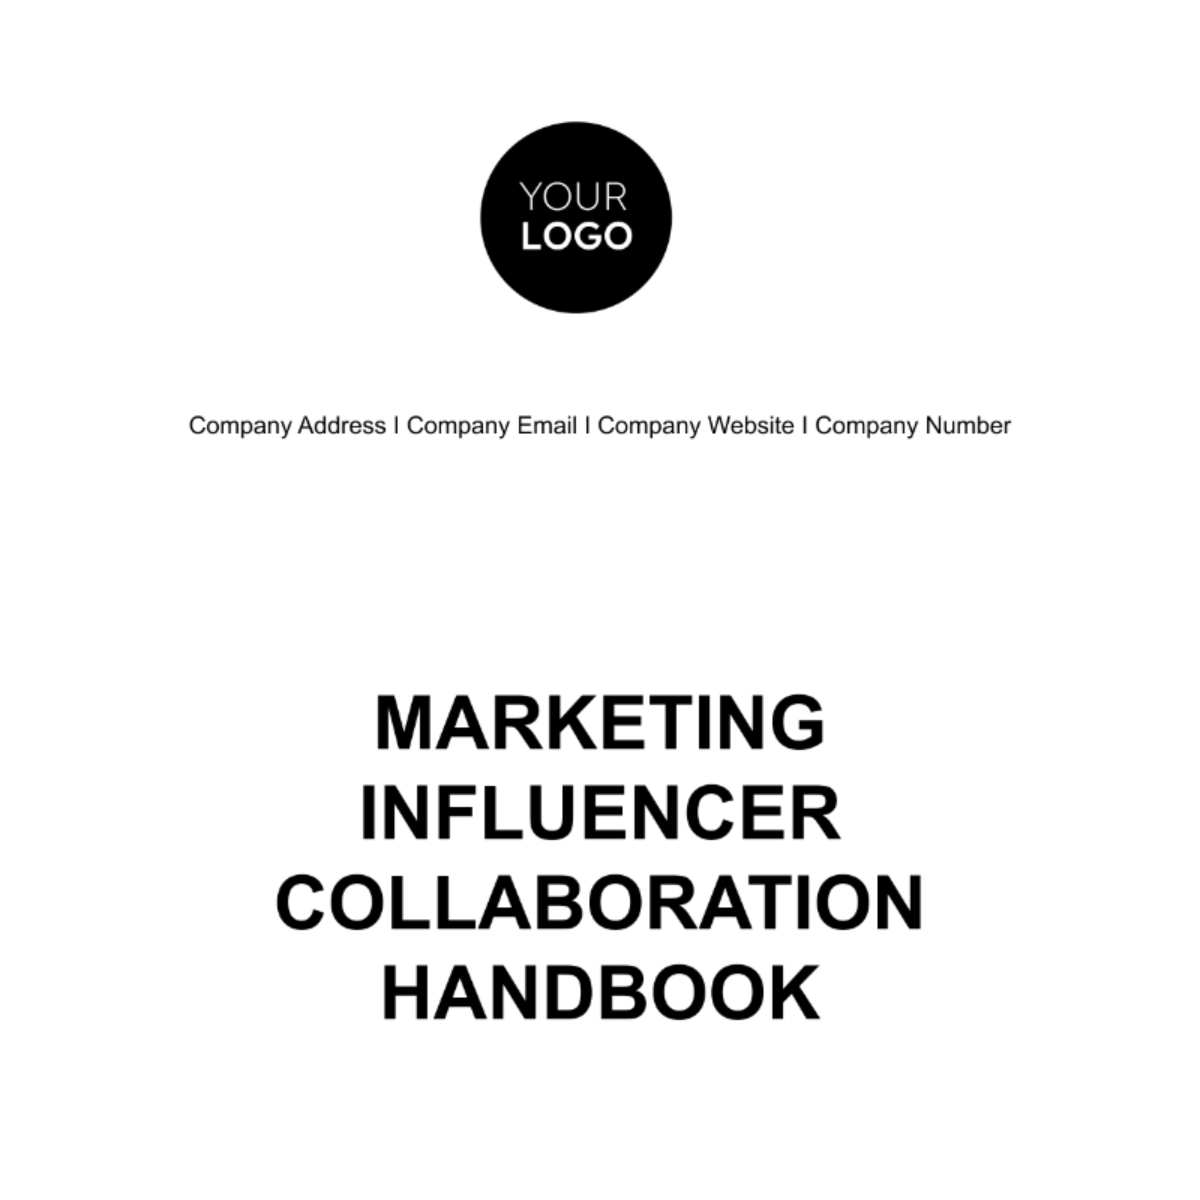 Marketing Influencer Collaboration Handbook Template